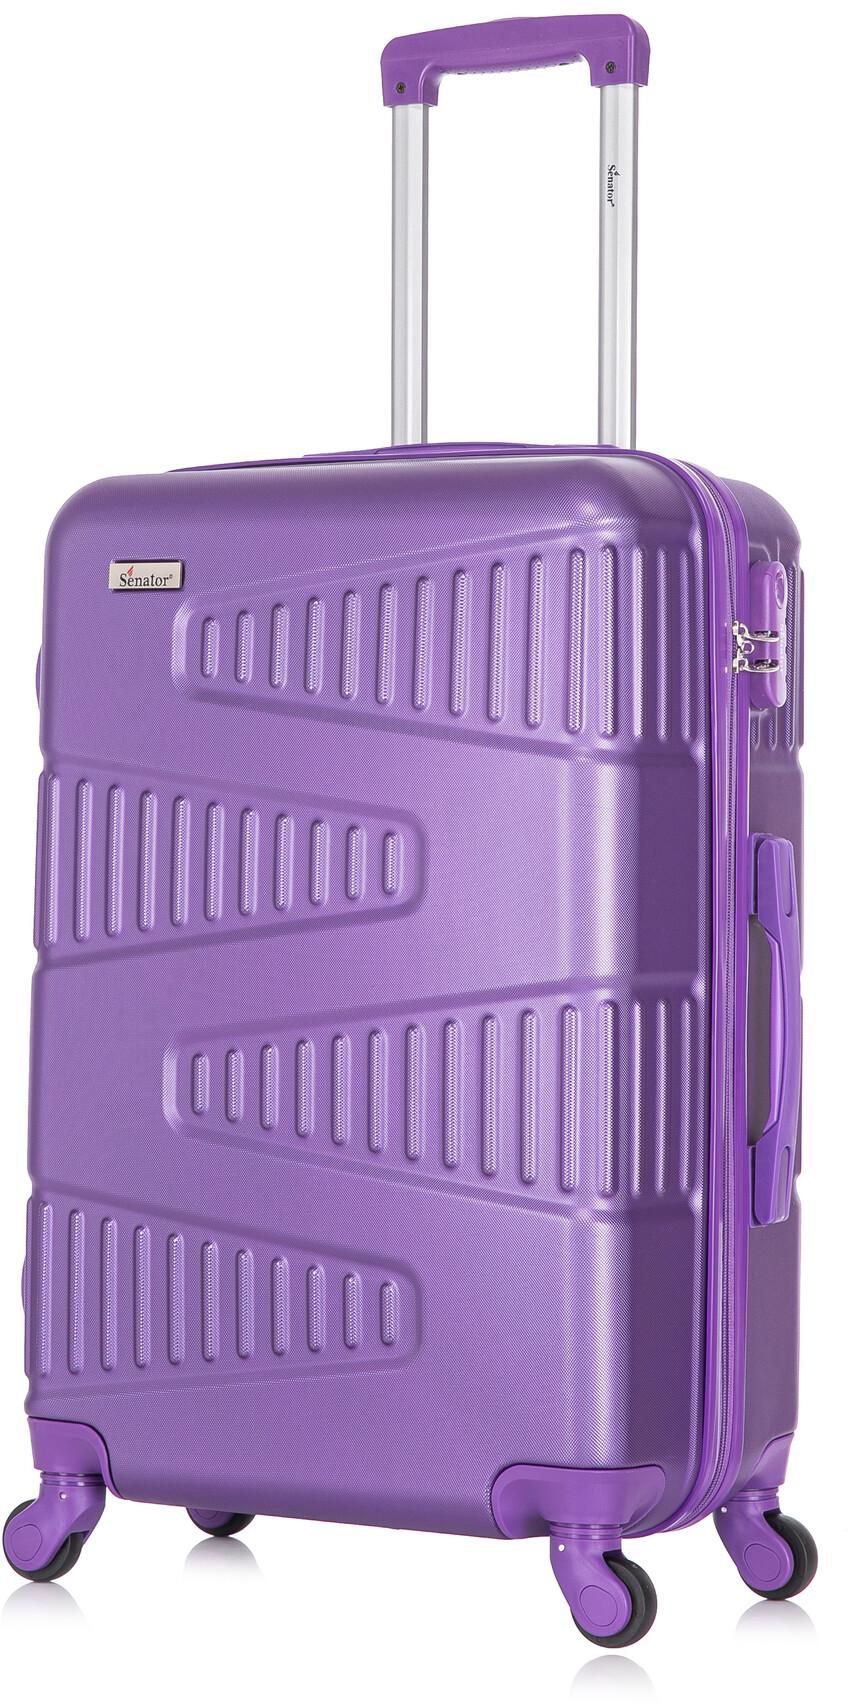 Senator Hard Case Medium Suitcase Luggage Trolley For Unisex ABS Lightweight Travel Bag with 4 Spinner Wheels KH1075 Highlight Purple